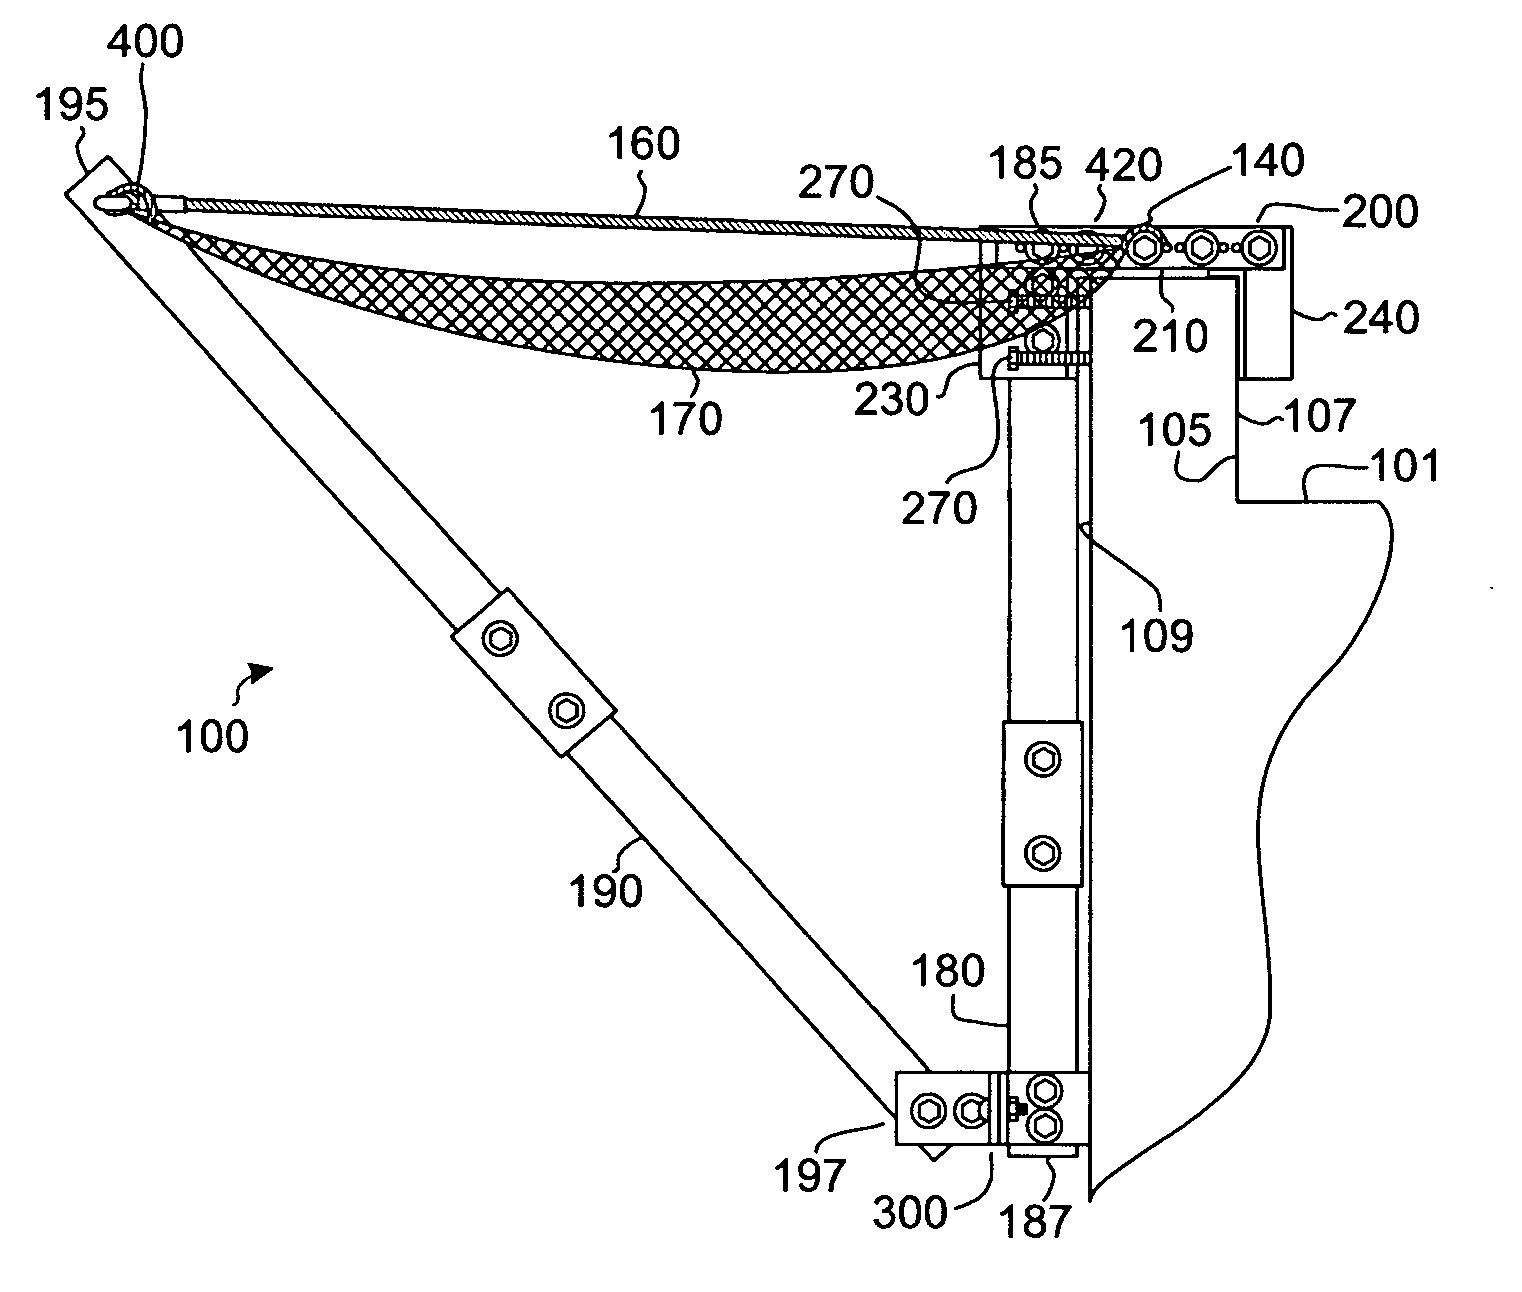 Parapet mounted net system